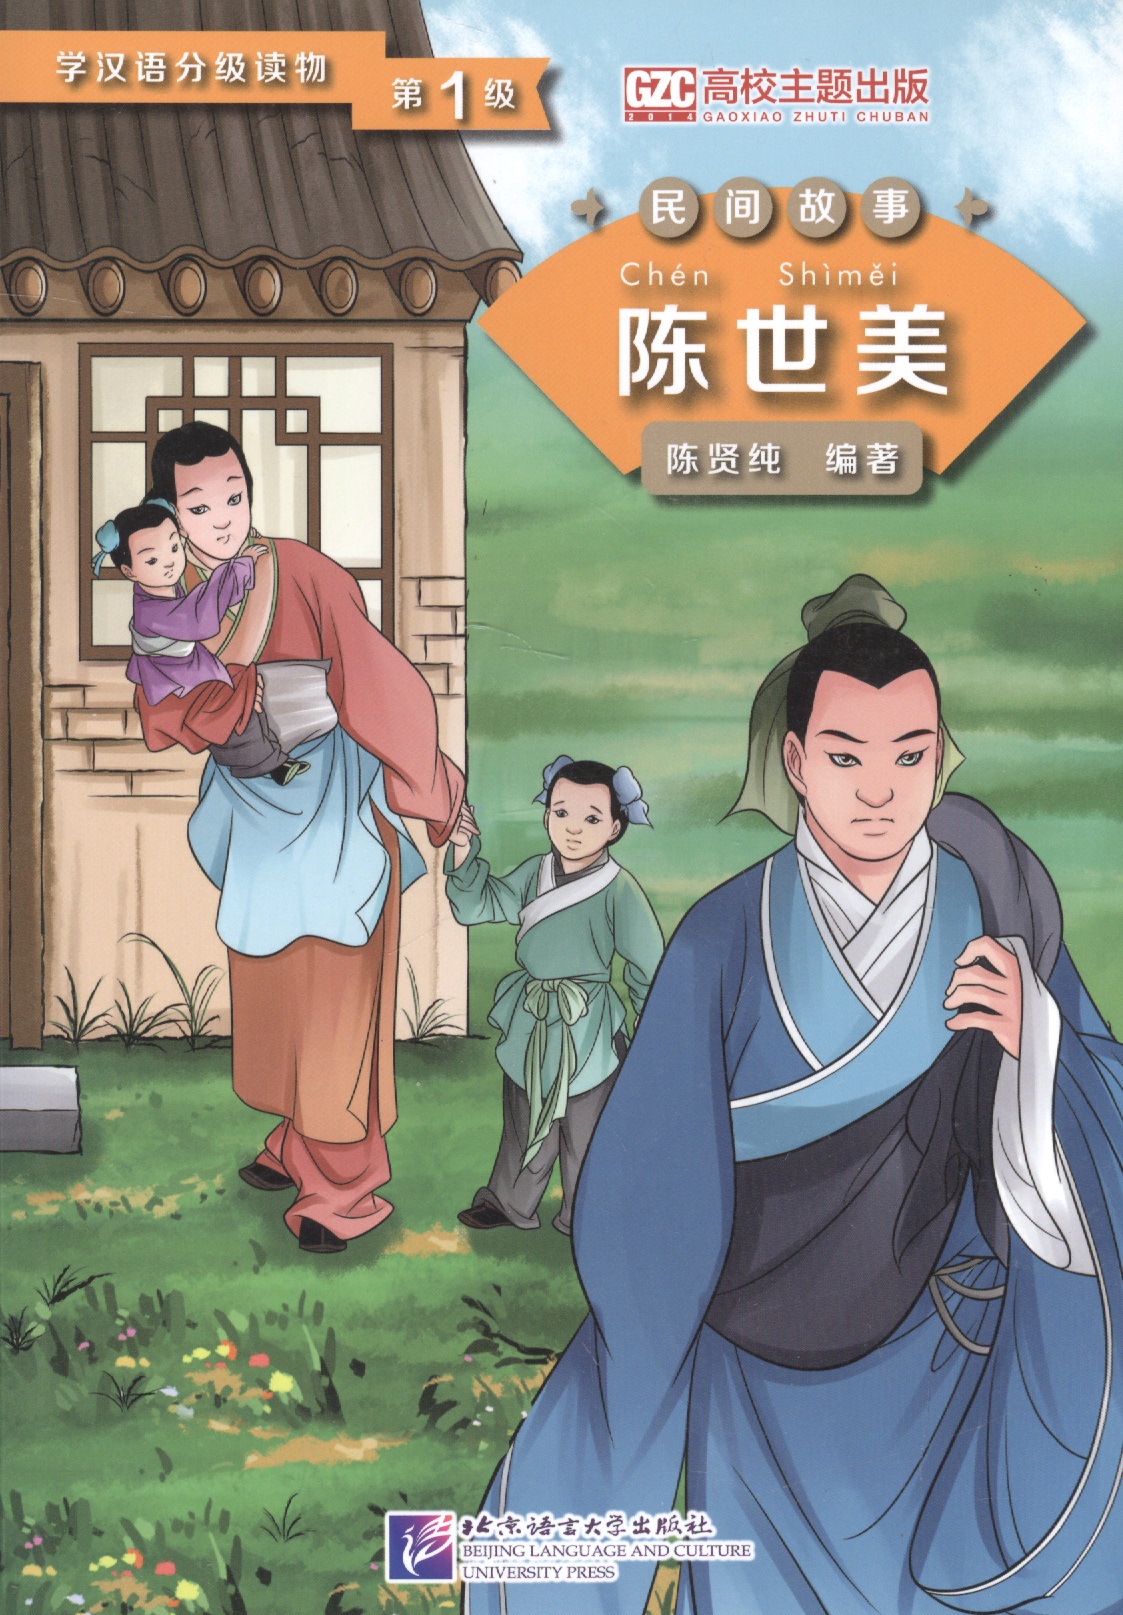 Graded Readers for Chinese Language Learners (Folktales): Chen Shimei. Адаптированная книга для чтения world folktales